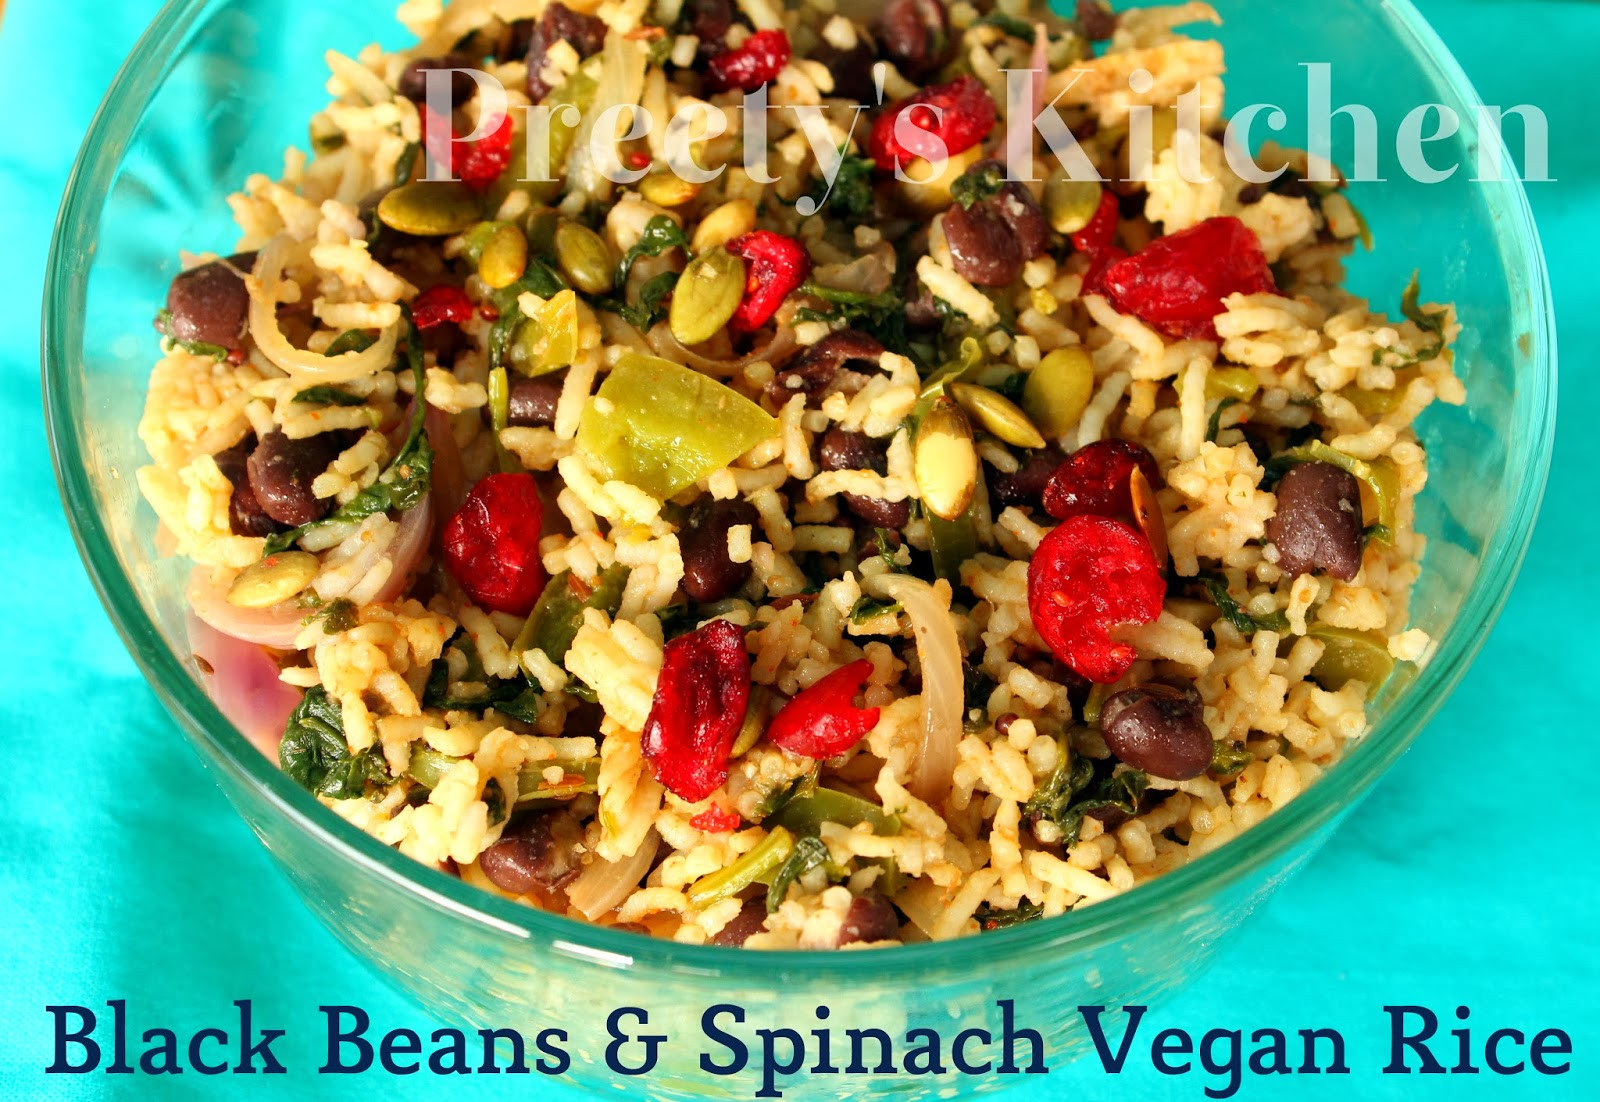 Black Vegan Recipes
 Preety s Kitchen Black Bean & Spinach Vegan Rice Recipe